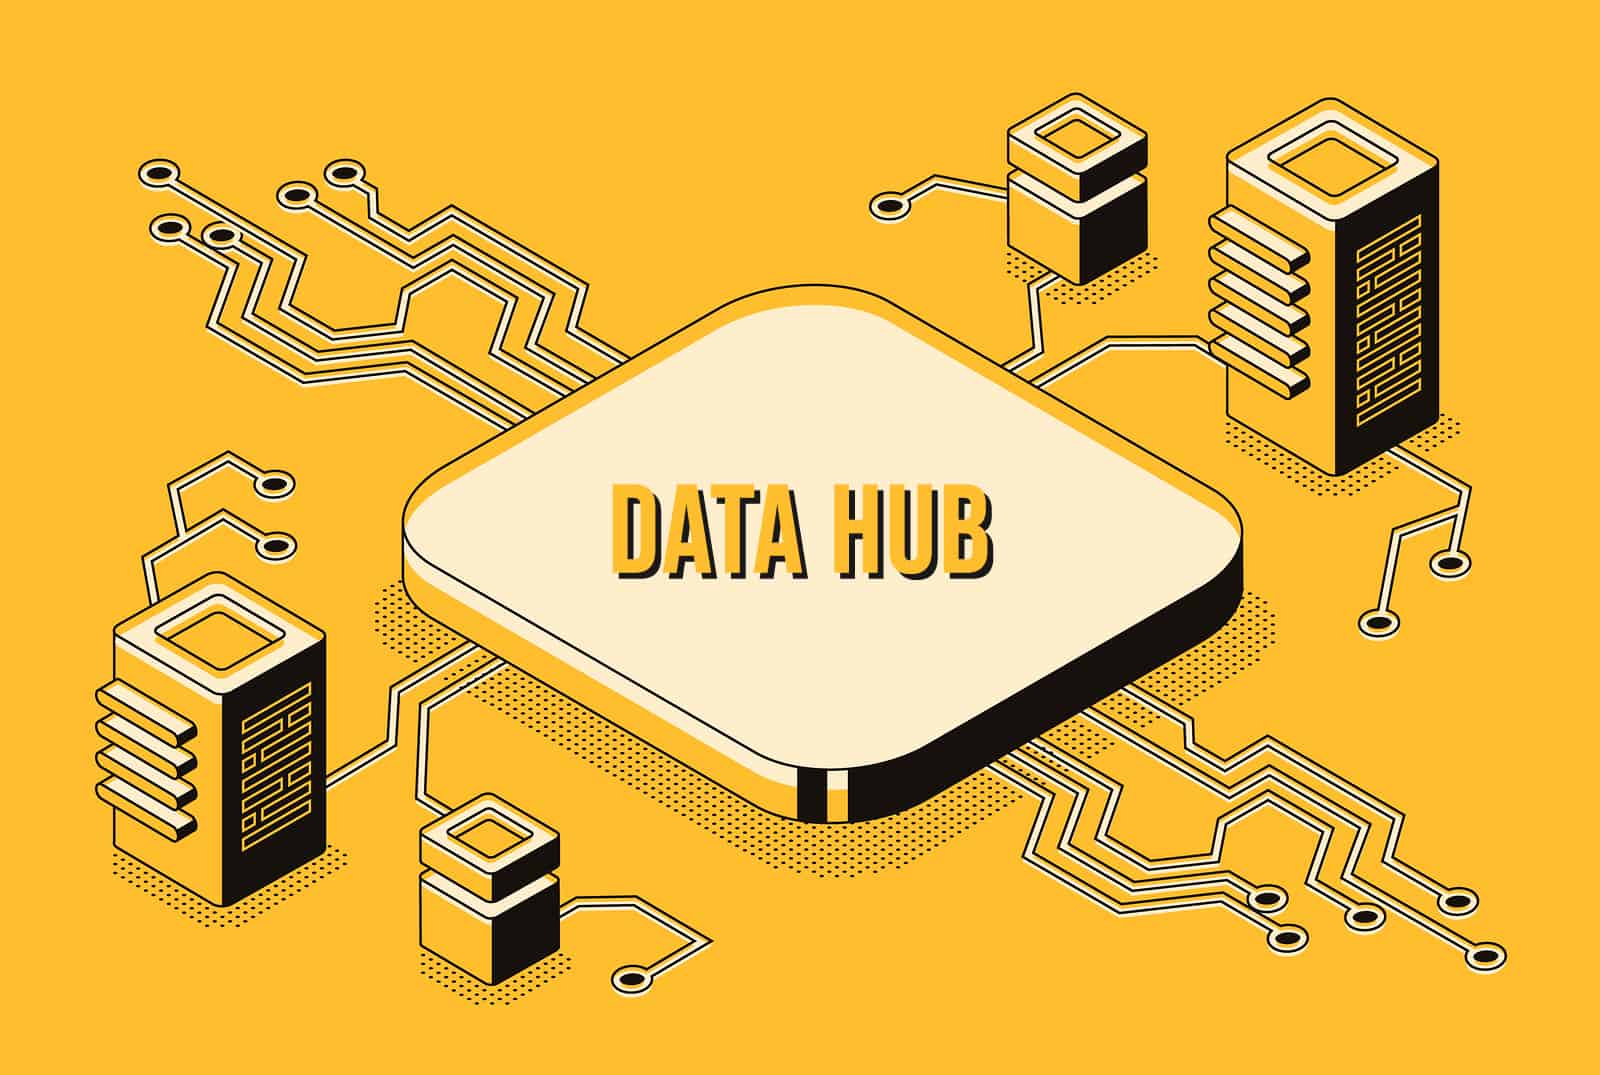 Data hub